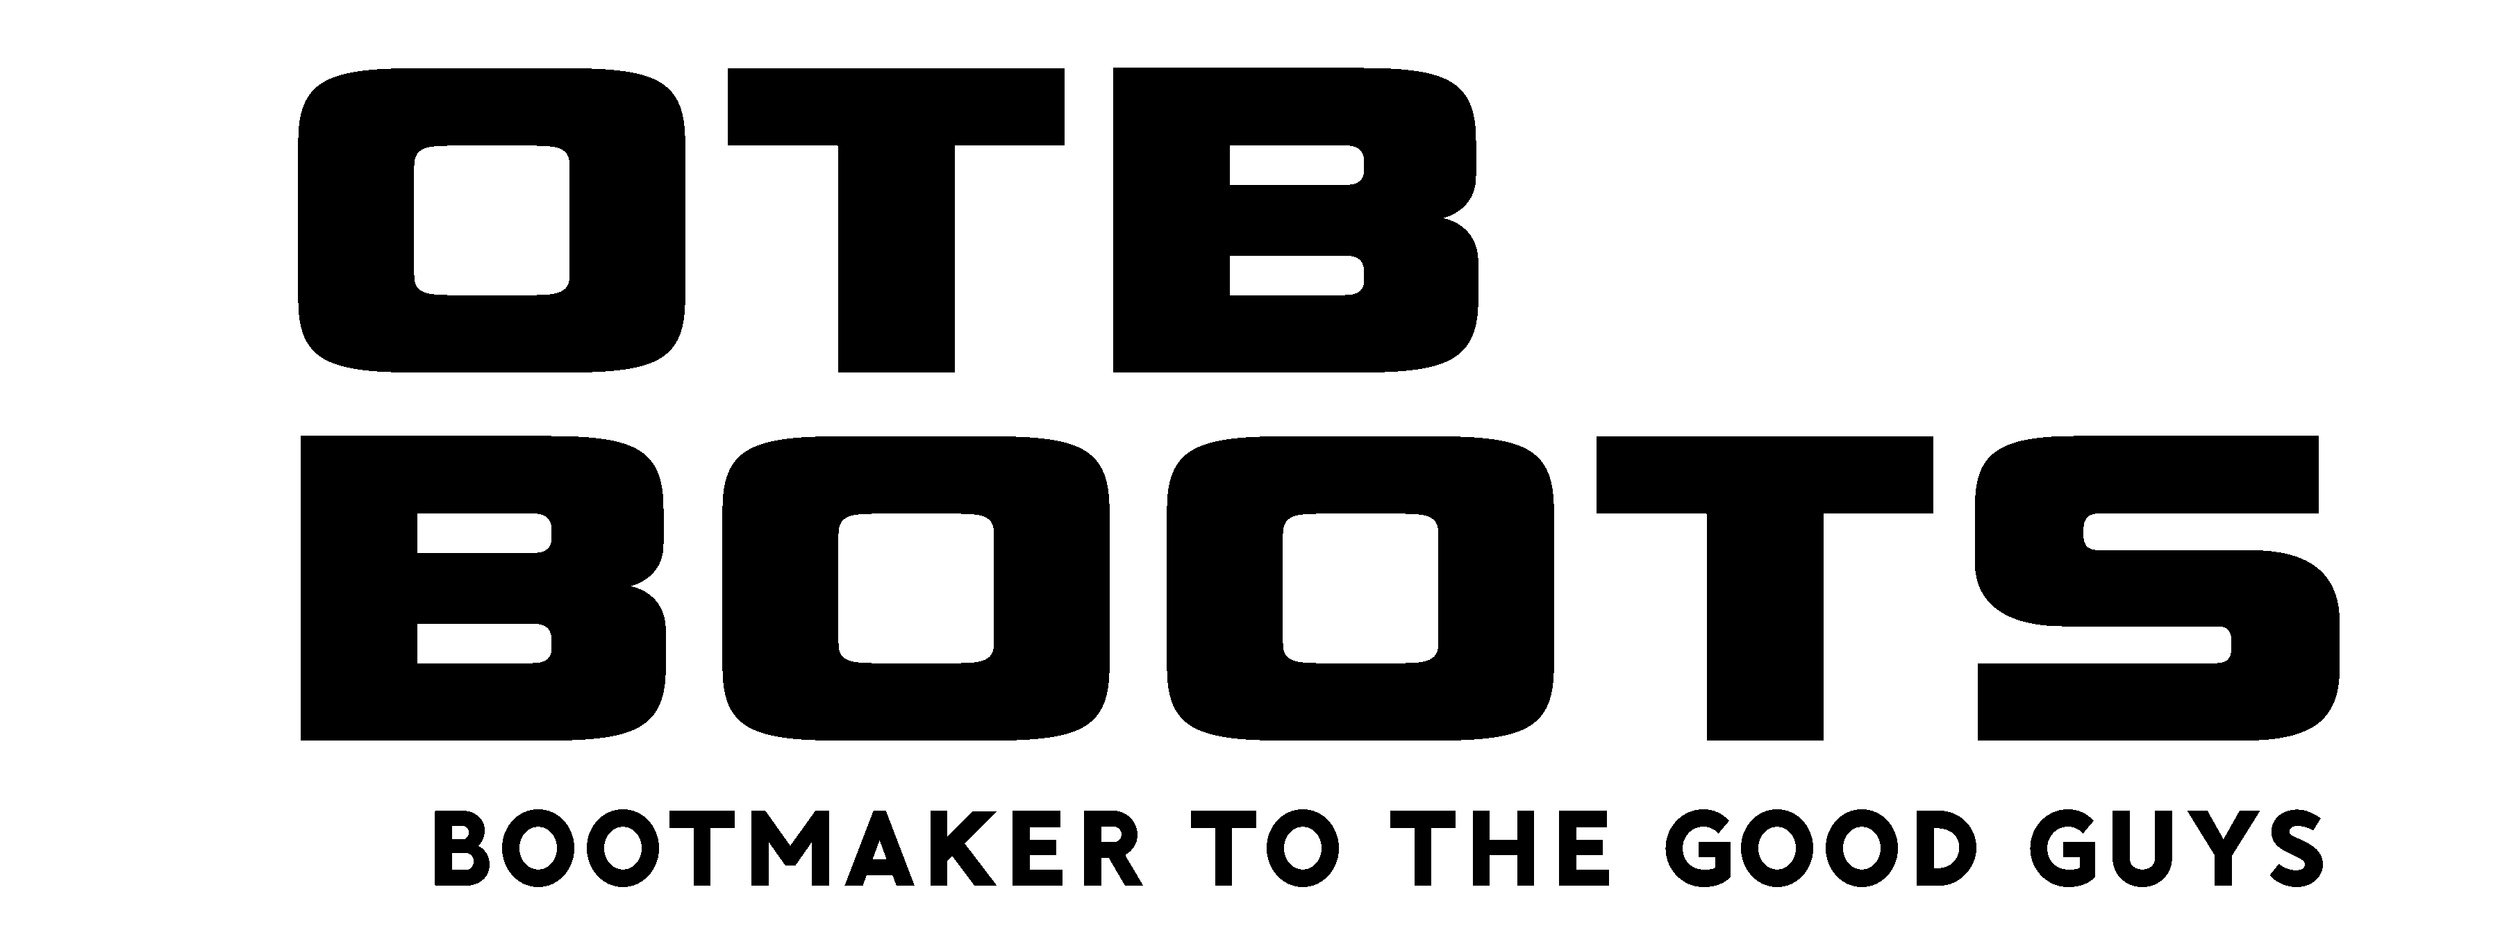 Copy of OTB-Logo-Black.png